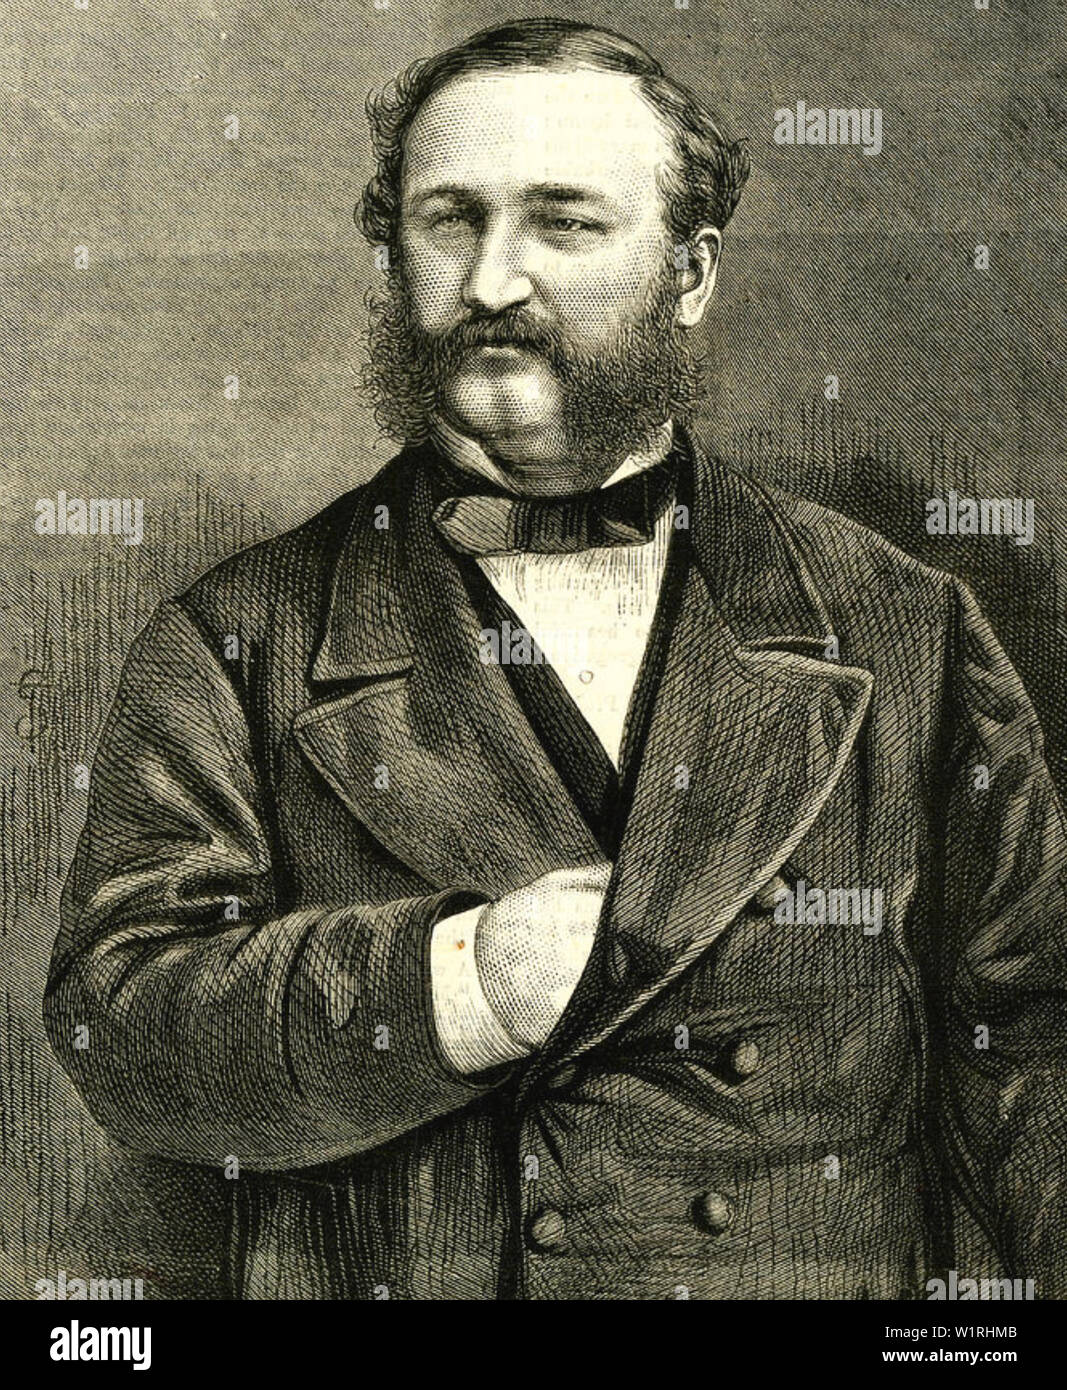 IRA DAVID SANKEY (1840-1908) American gospel singer and composer Stock Photo